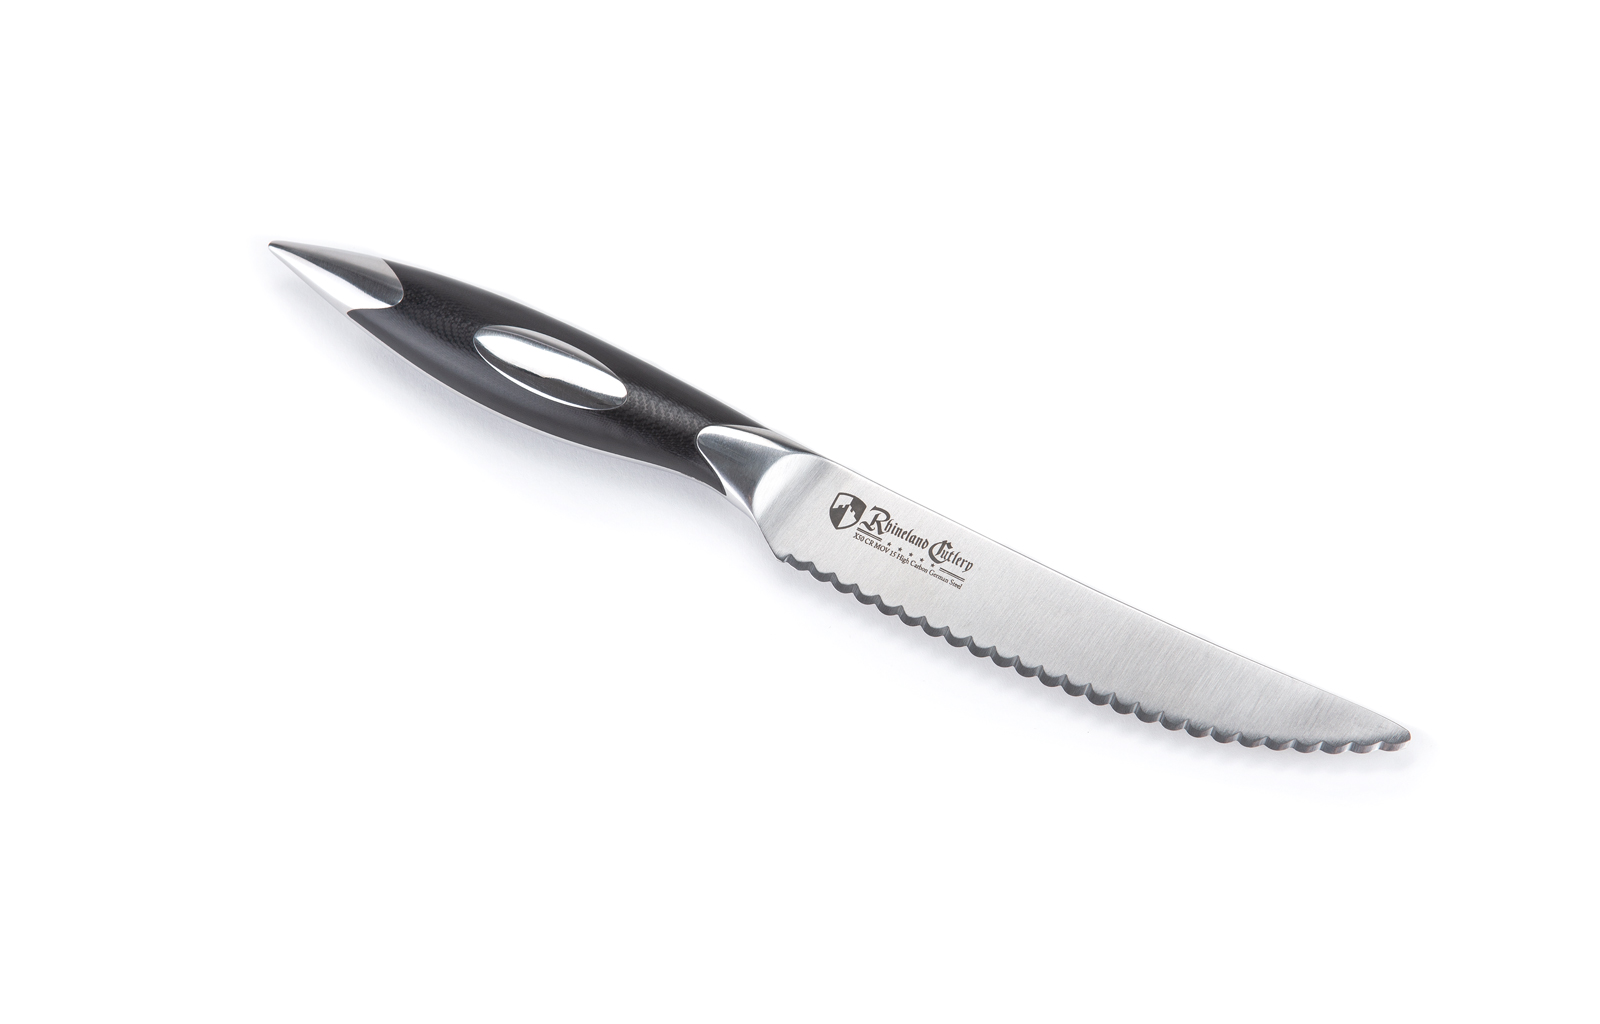 5” Serrated Steak Knife with G10 Handle - Rhineland Cutlery